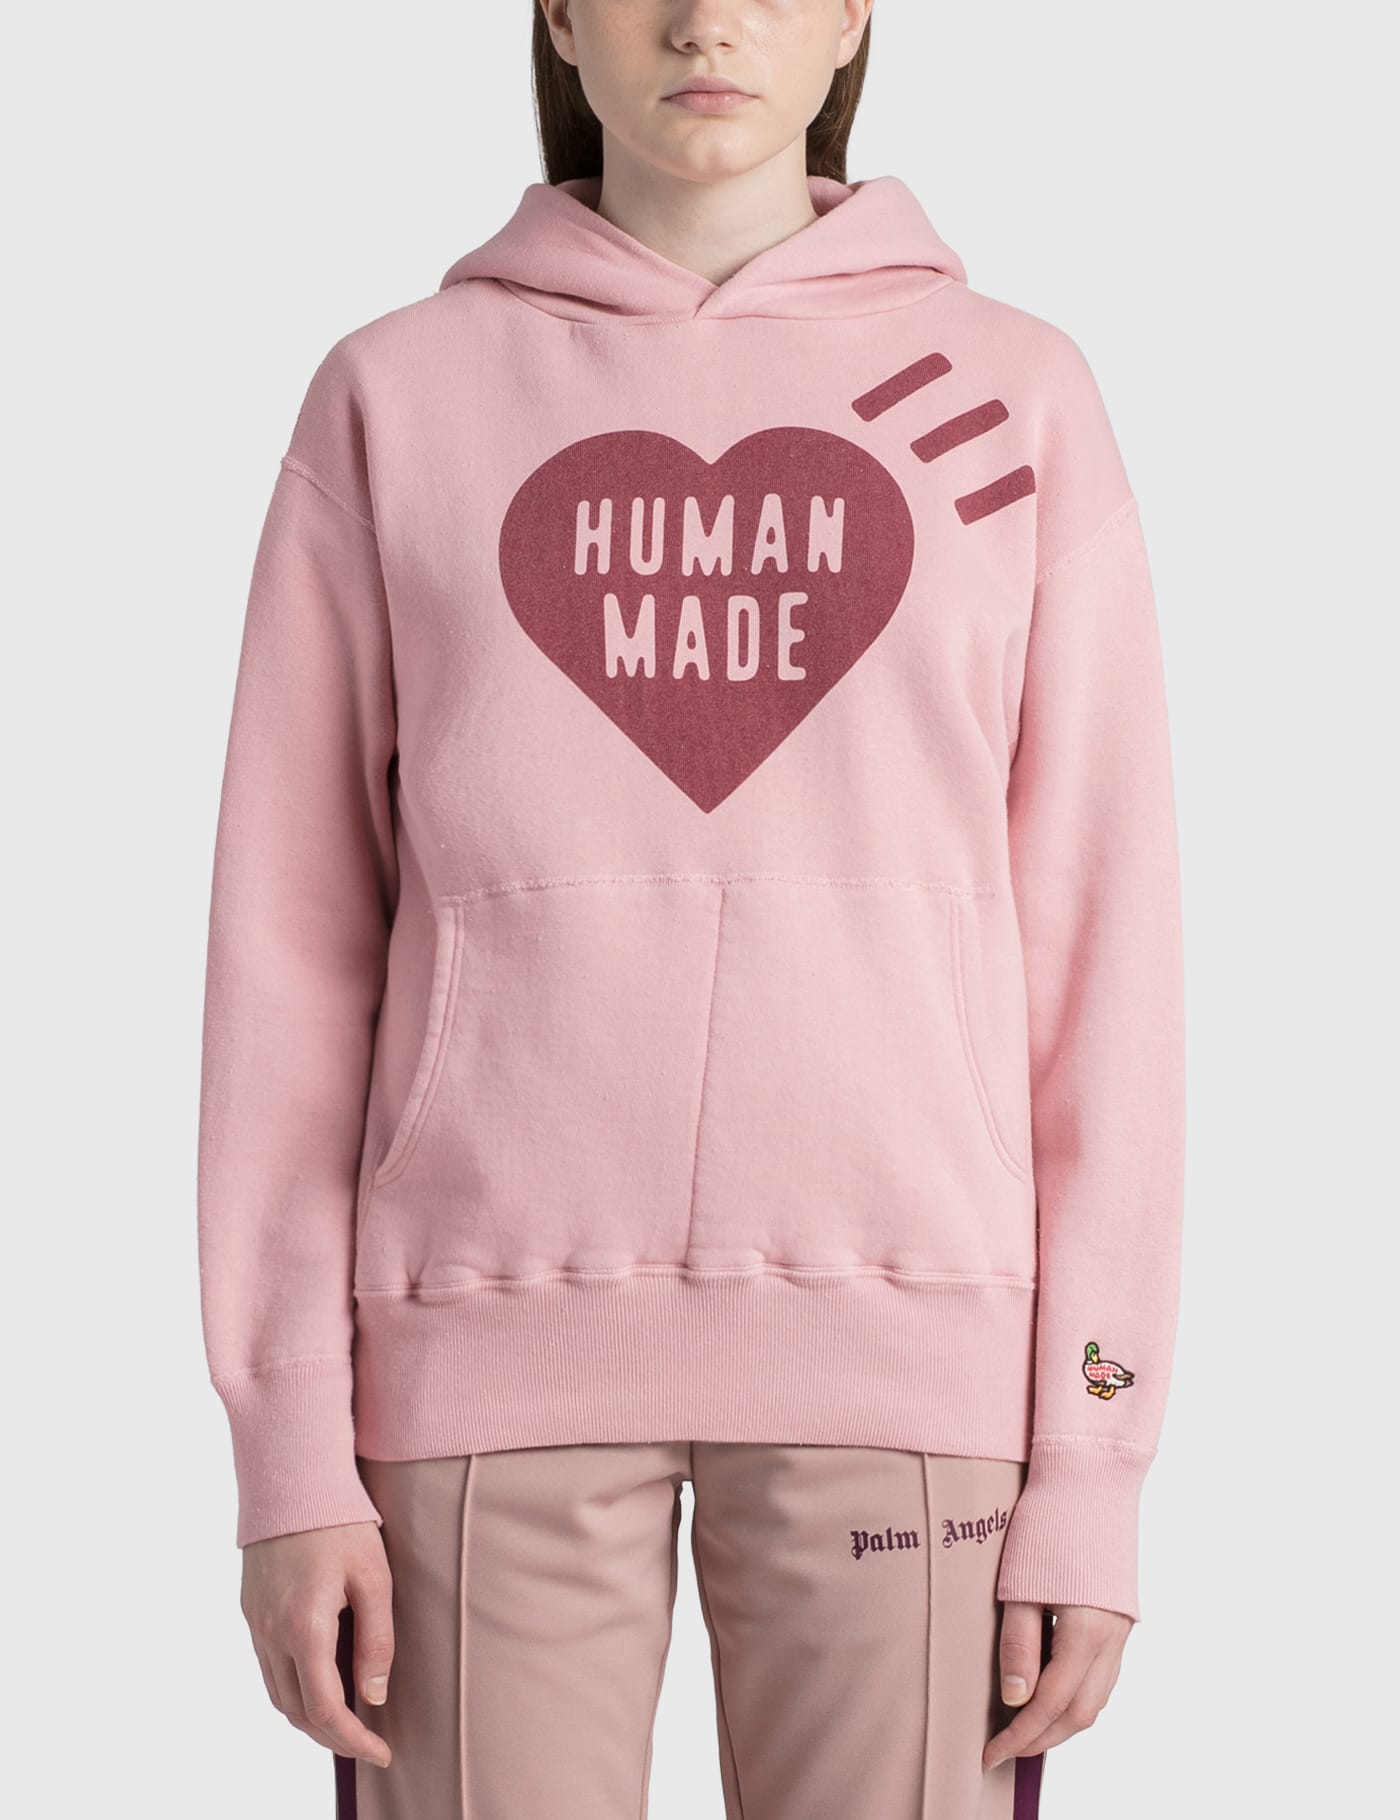 Human Made   Heart Logo Hoodie   HBX   Globally Curated Fashion